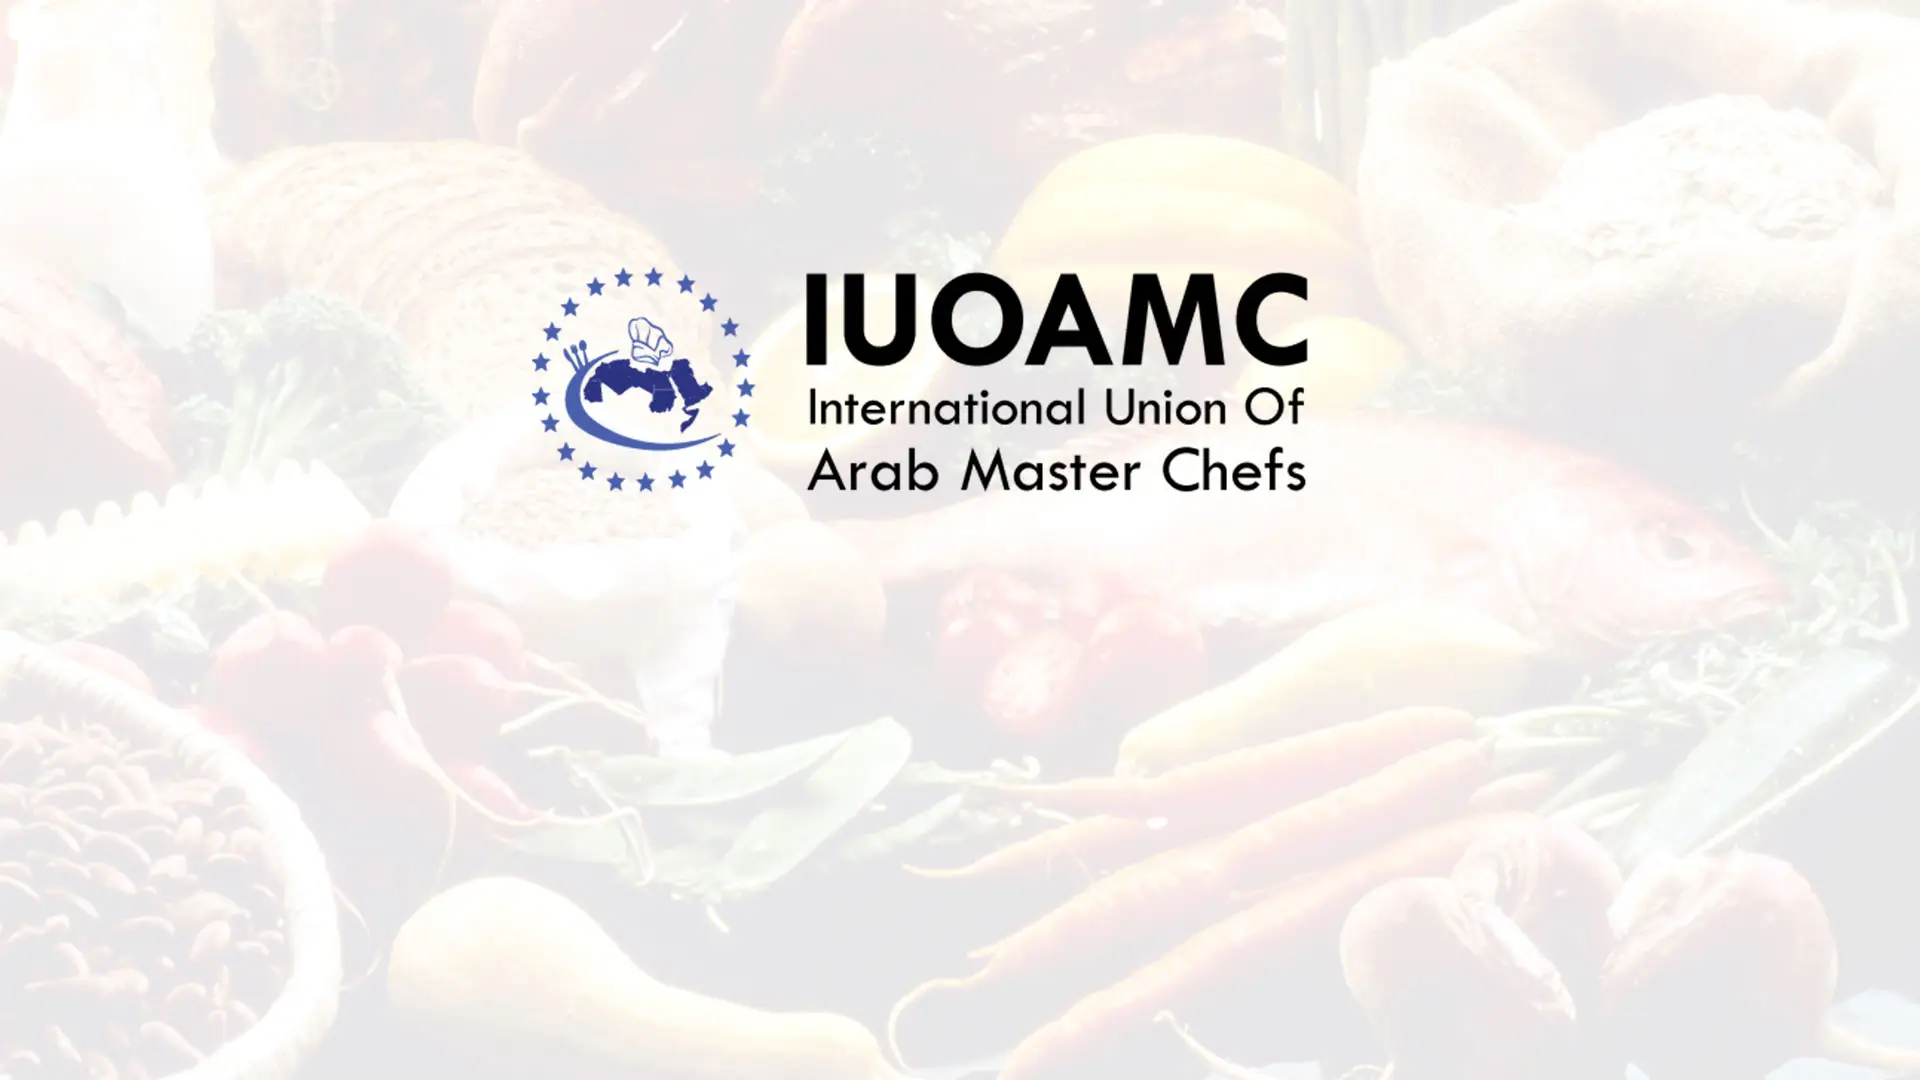 International Union Of Arab Master Chefs